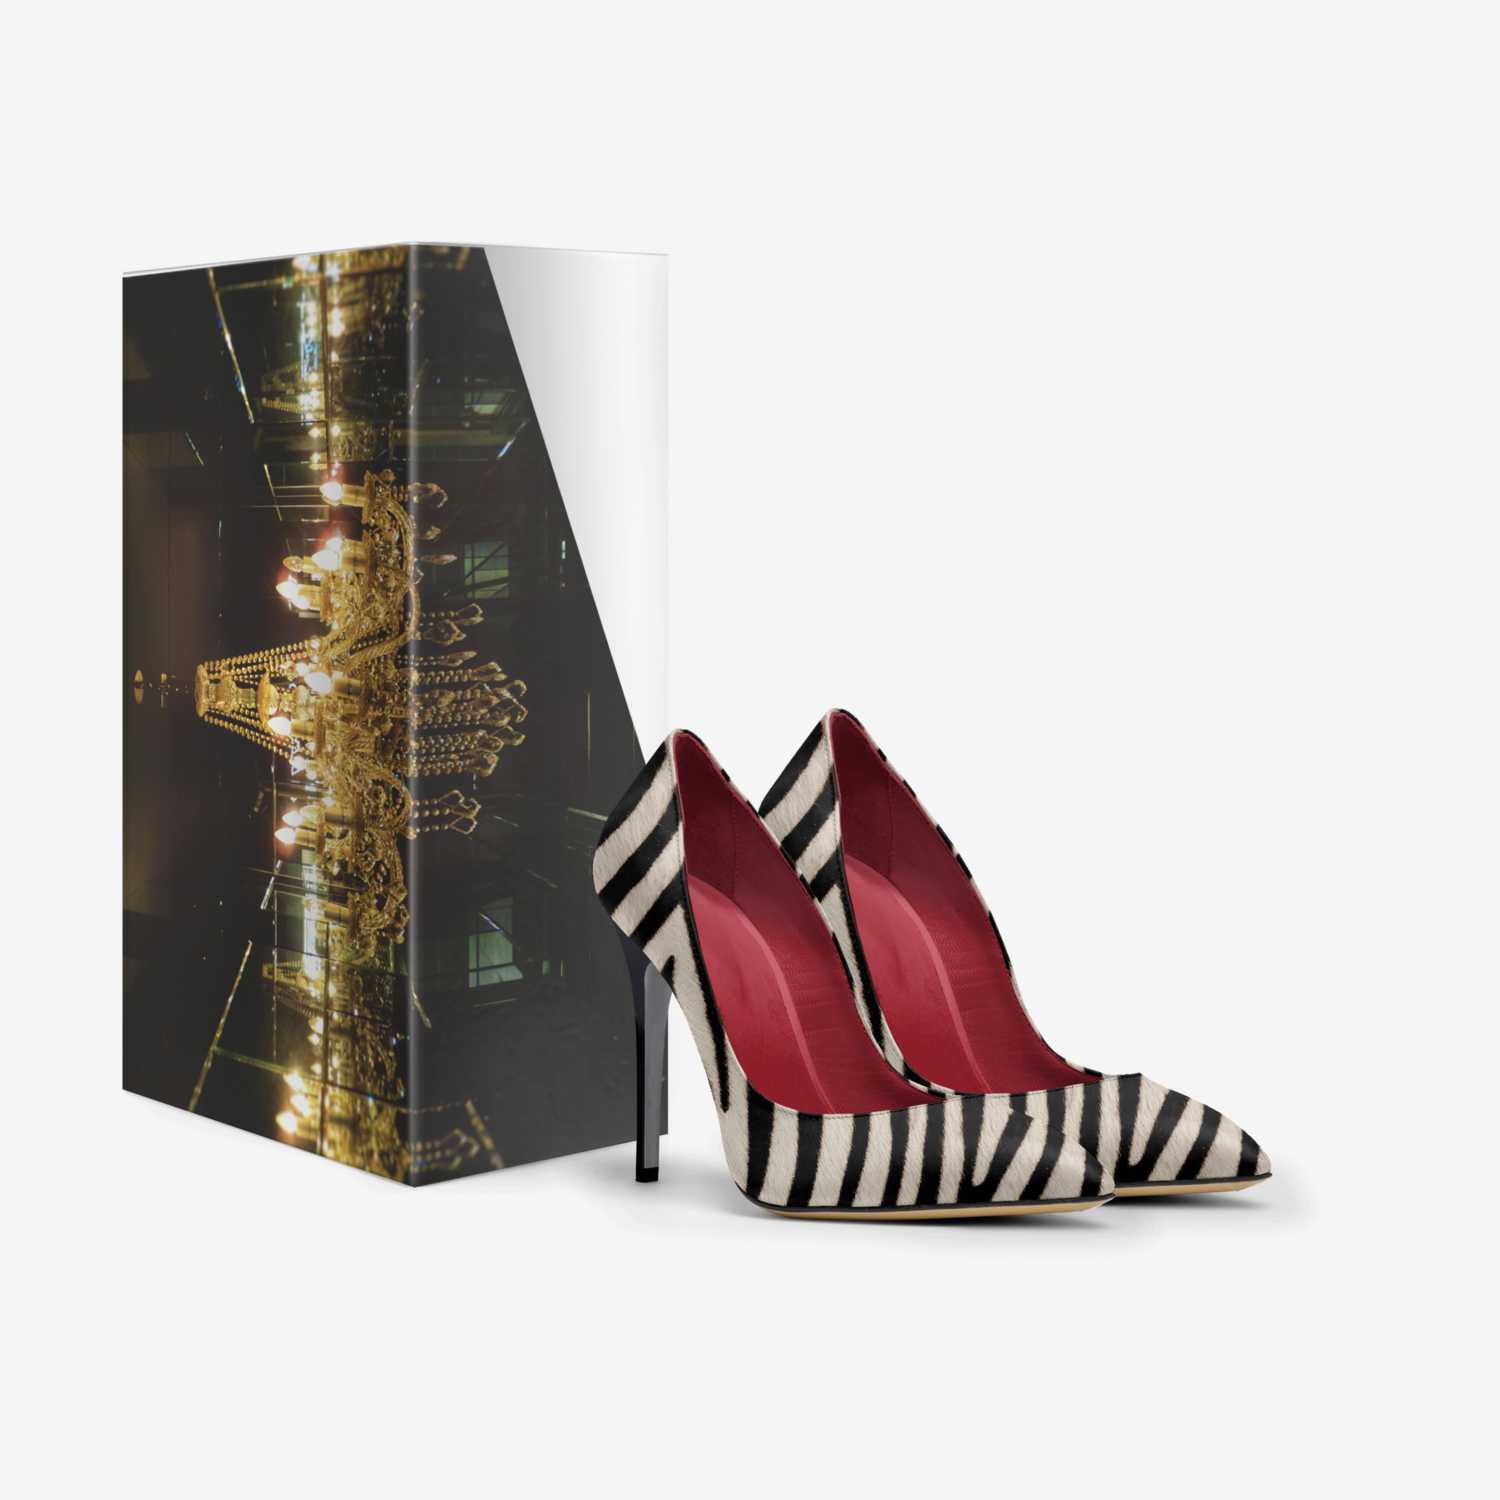 JAE’ MONAE’ custom made in Italy shoes by Janae’ Johnson | Box view